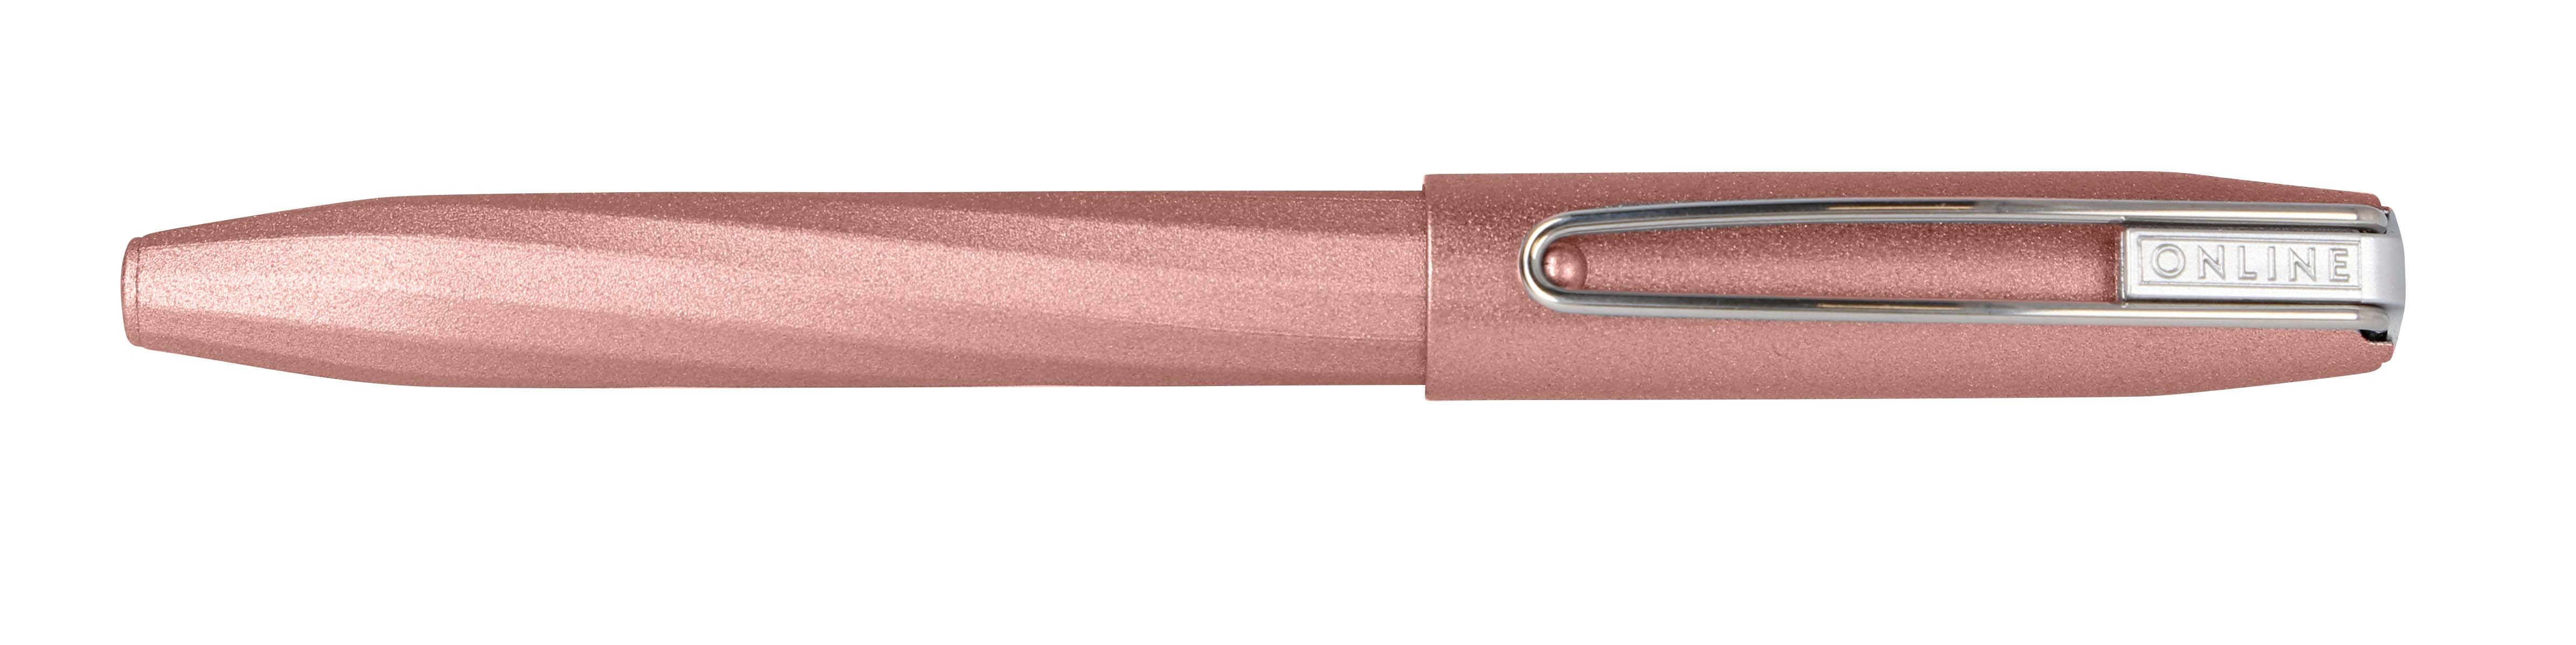 ONLINE Stylo Plume Slope M 26131/3D Metallic Rose M